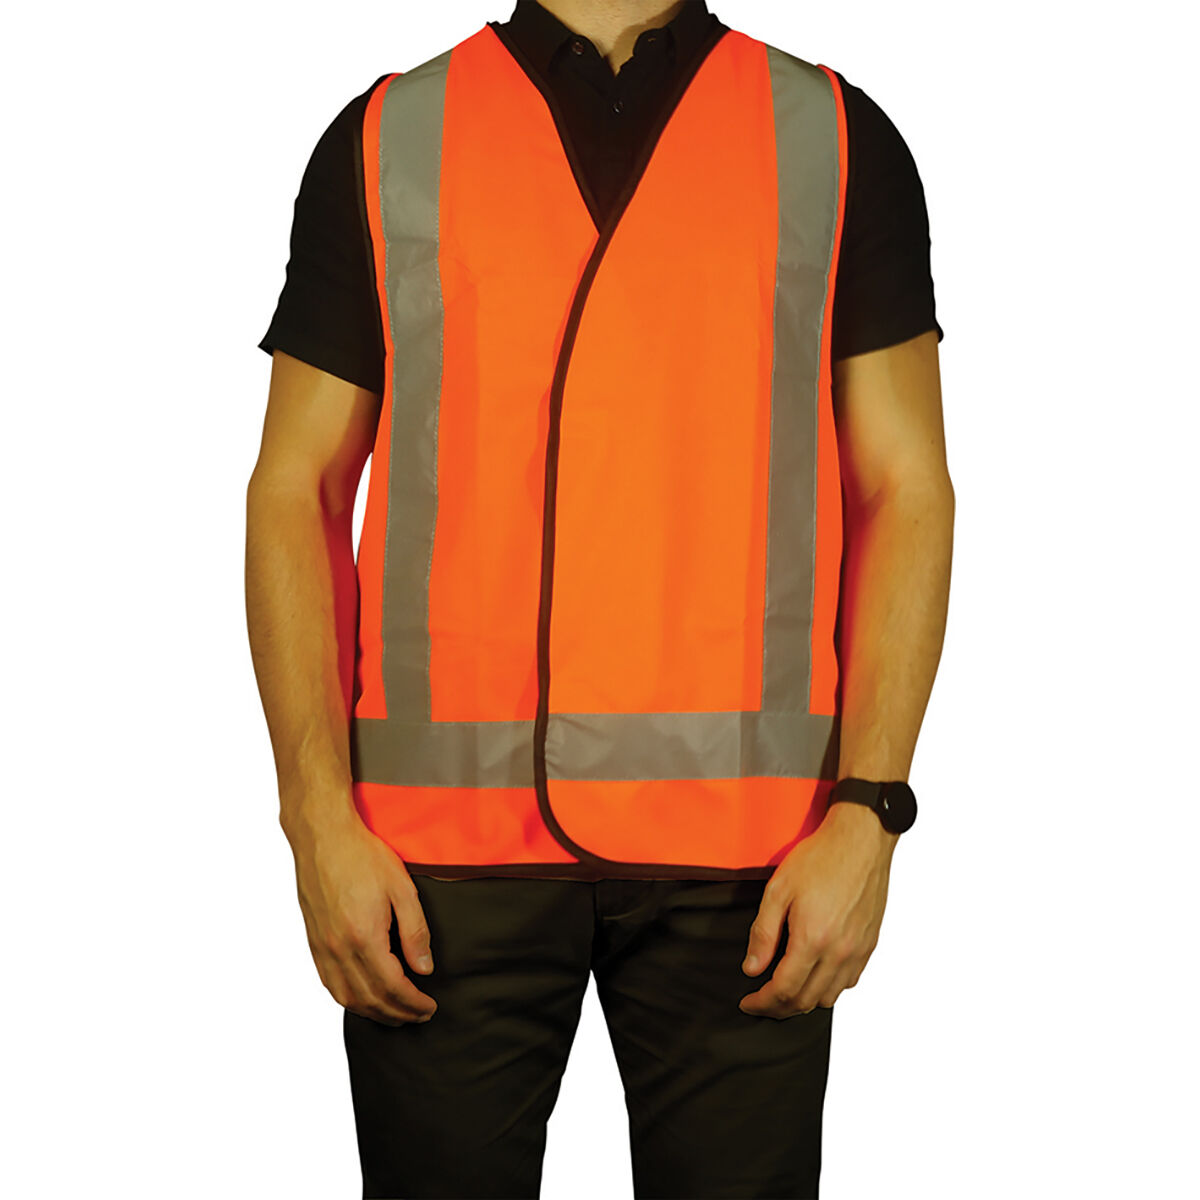 Trafalgar Hi-Vis Day Night Safety Vest Orange Large | Supercheap Auto